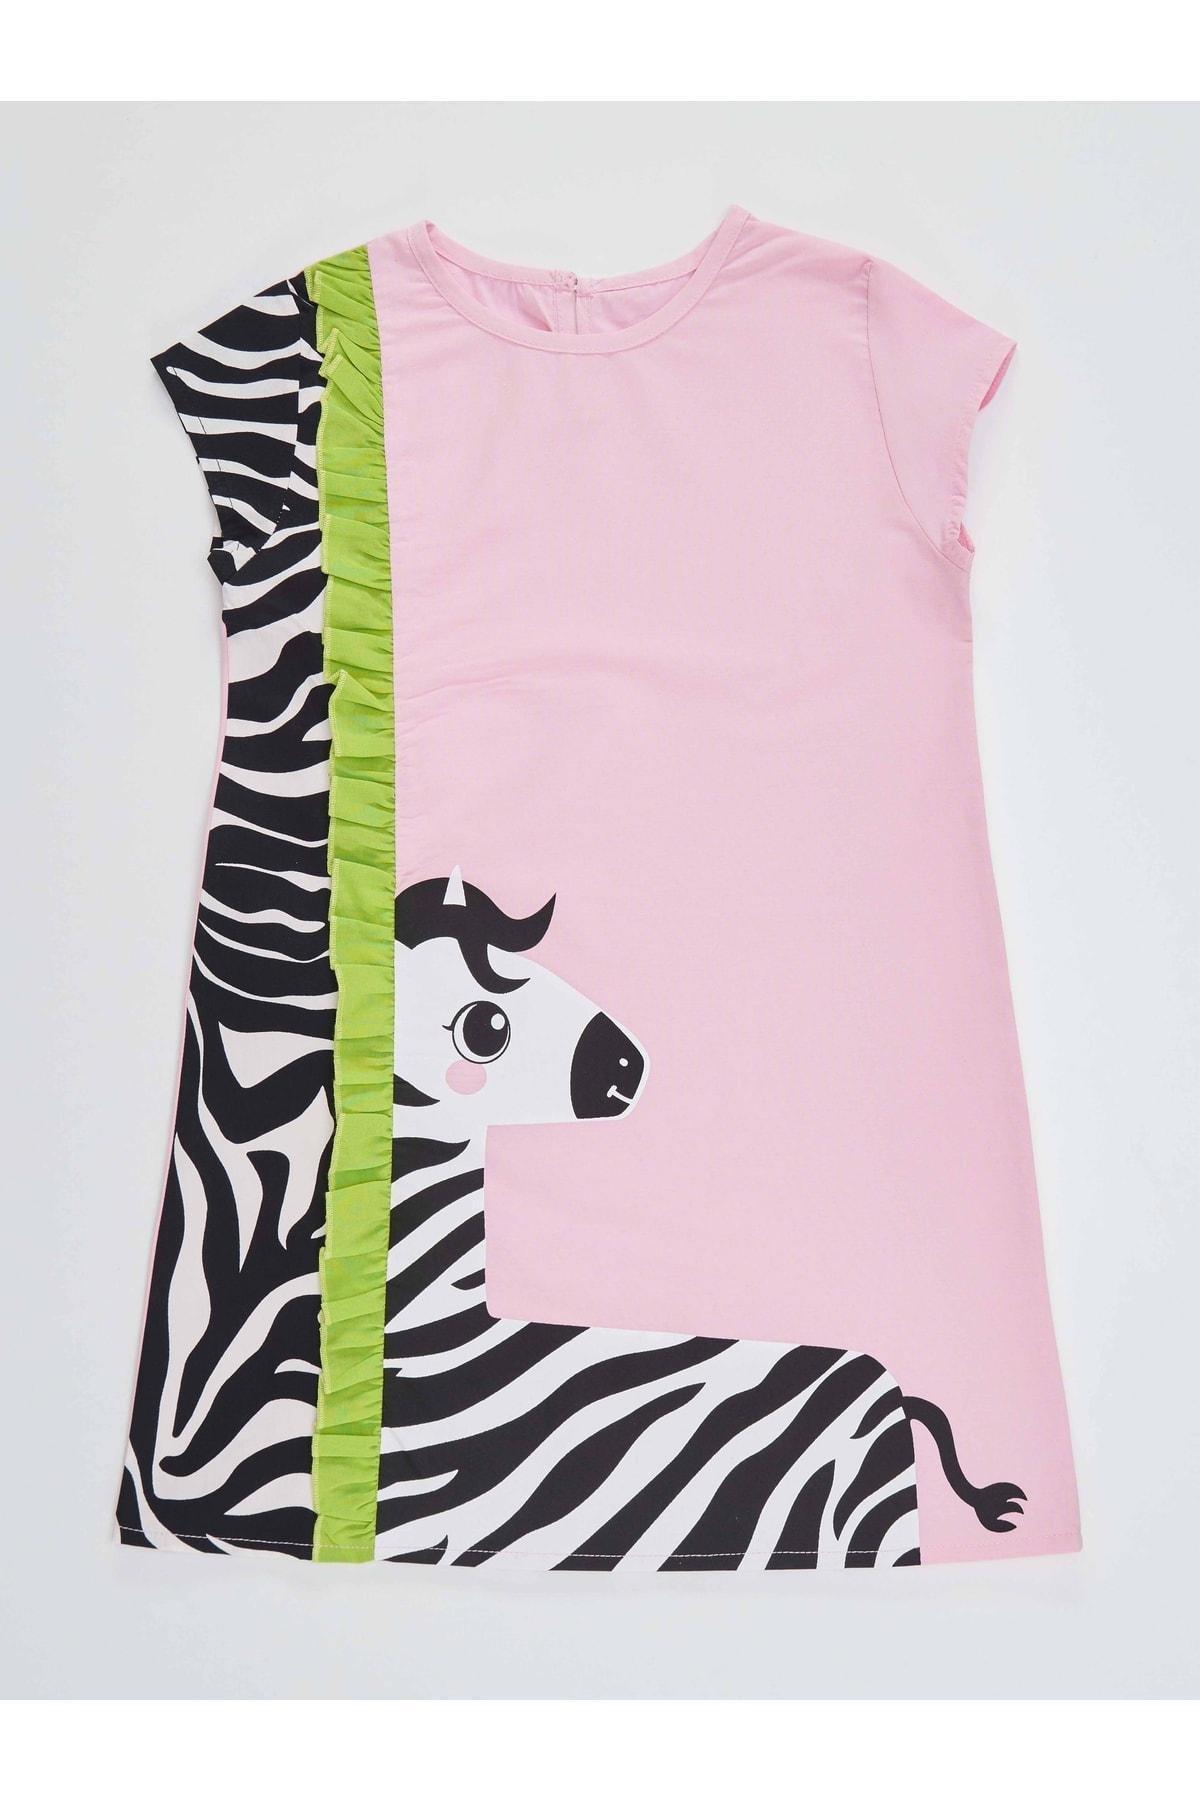 Denokids - Pink Ruffled Patterned Dress, Kids Girls